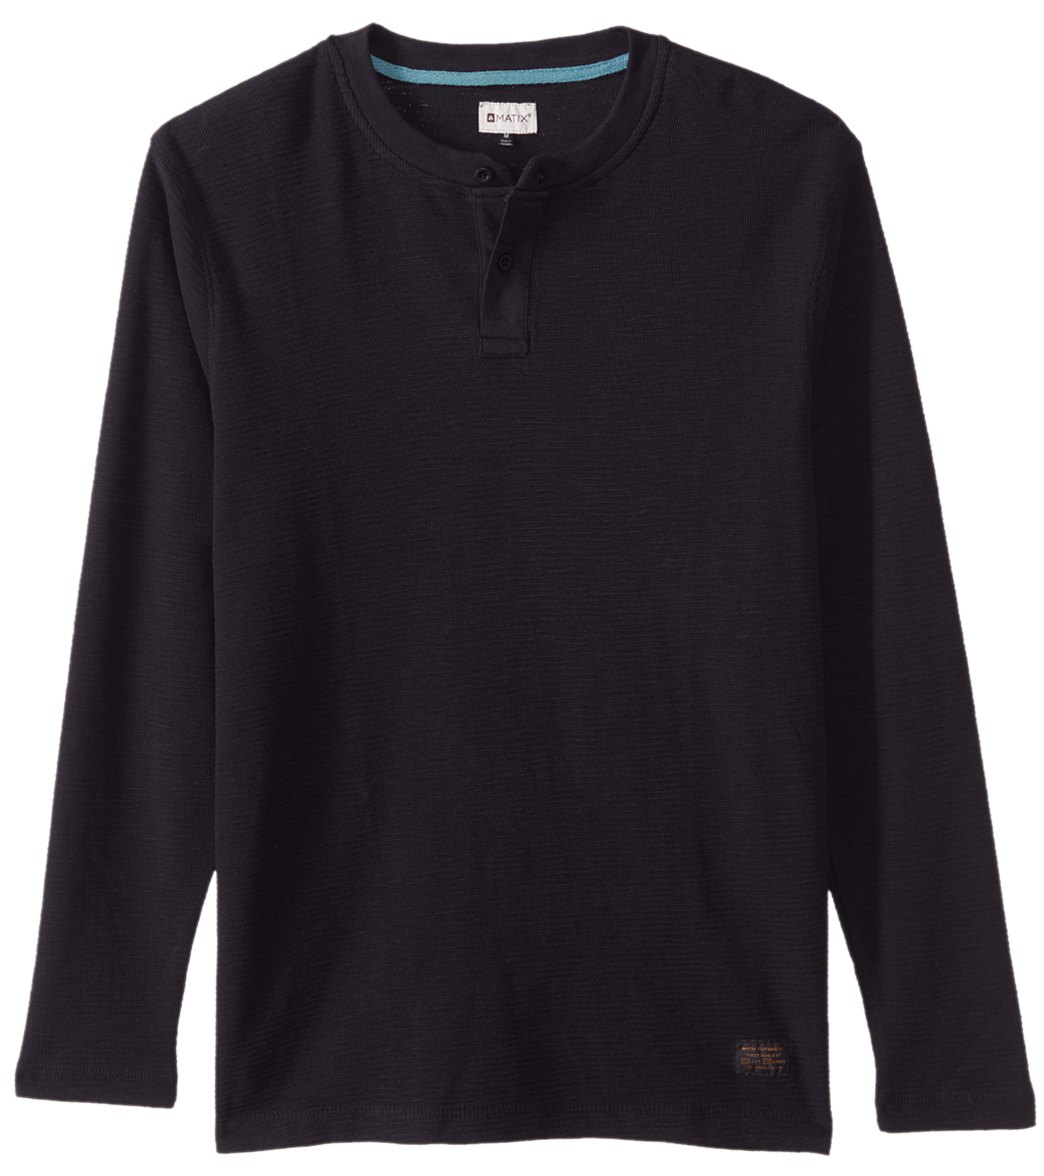 Matix Men's Lateshift Long Sleeve Henley Shirt - Black Small Cotton - Swimoutlet.com